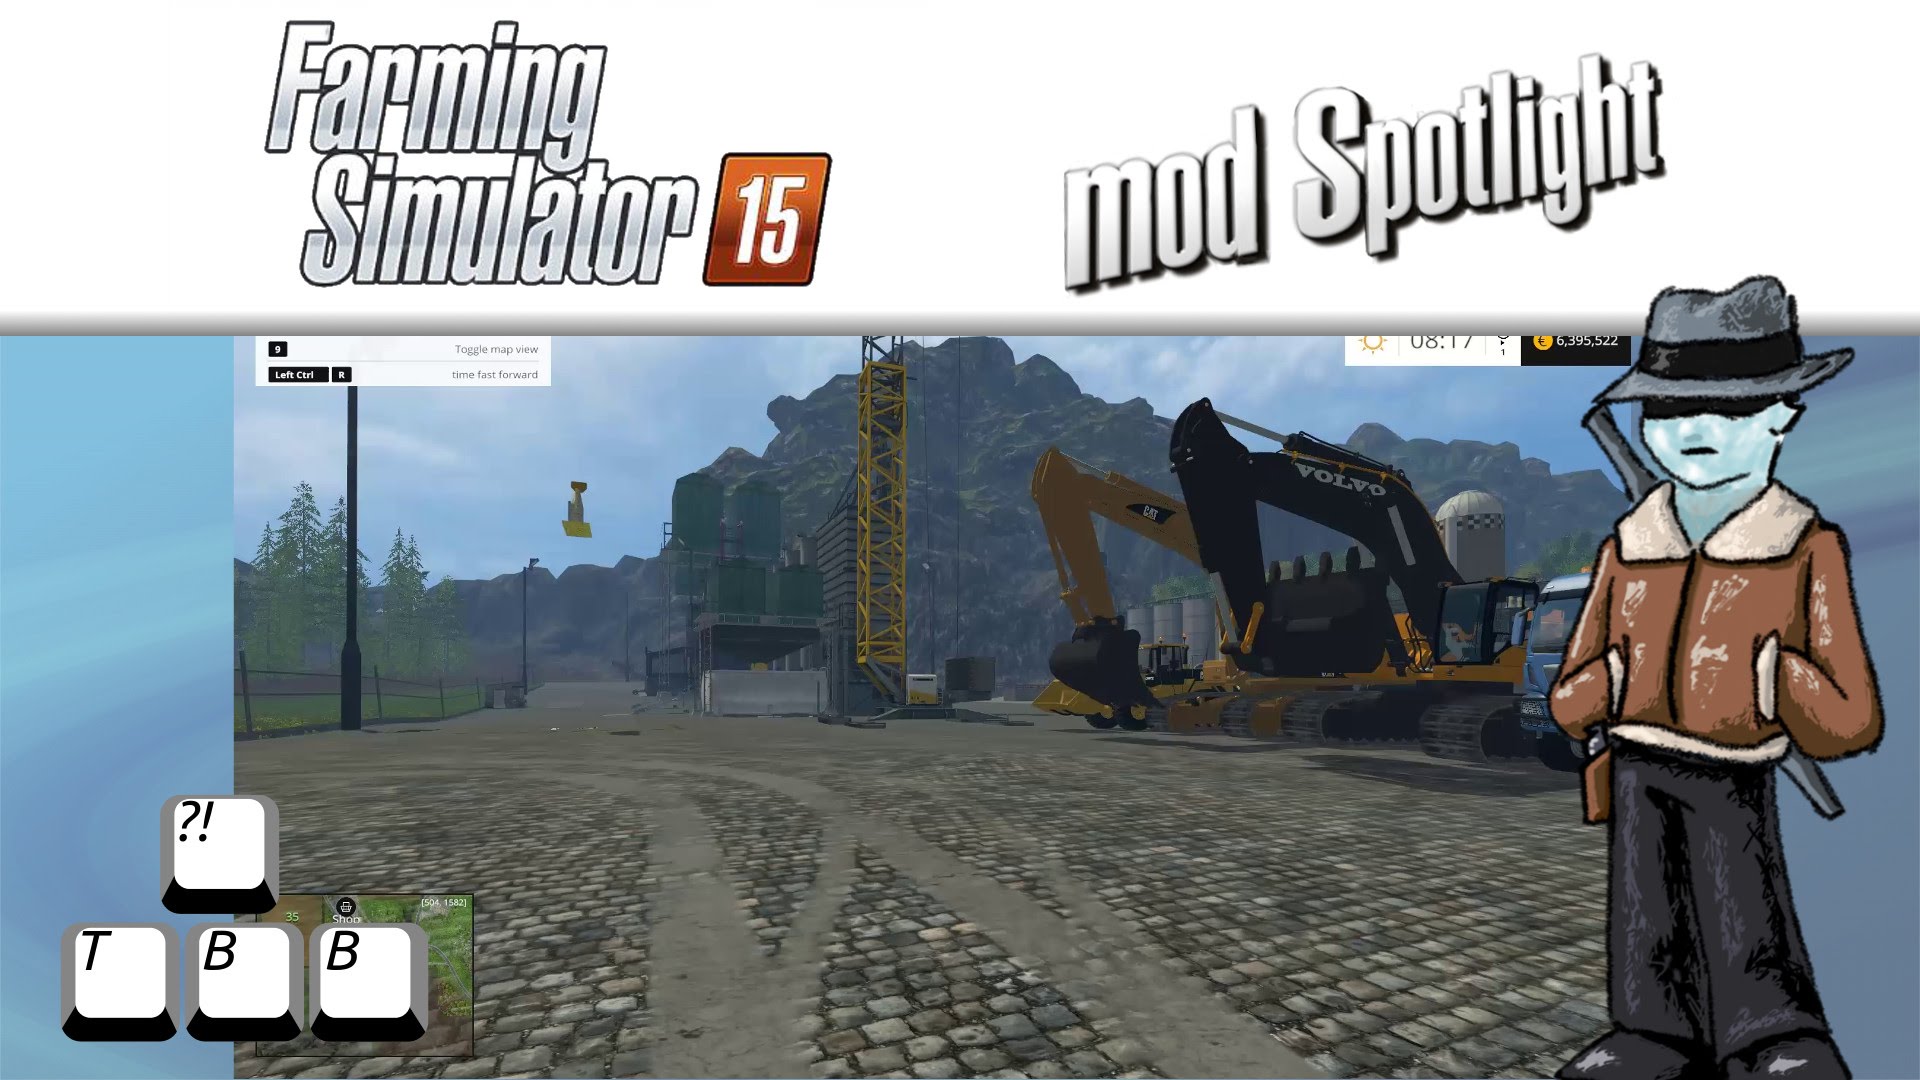 Farming Simulator 15 Mod Spotlight - Going Mining! - YouTube